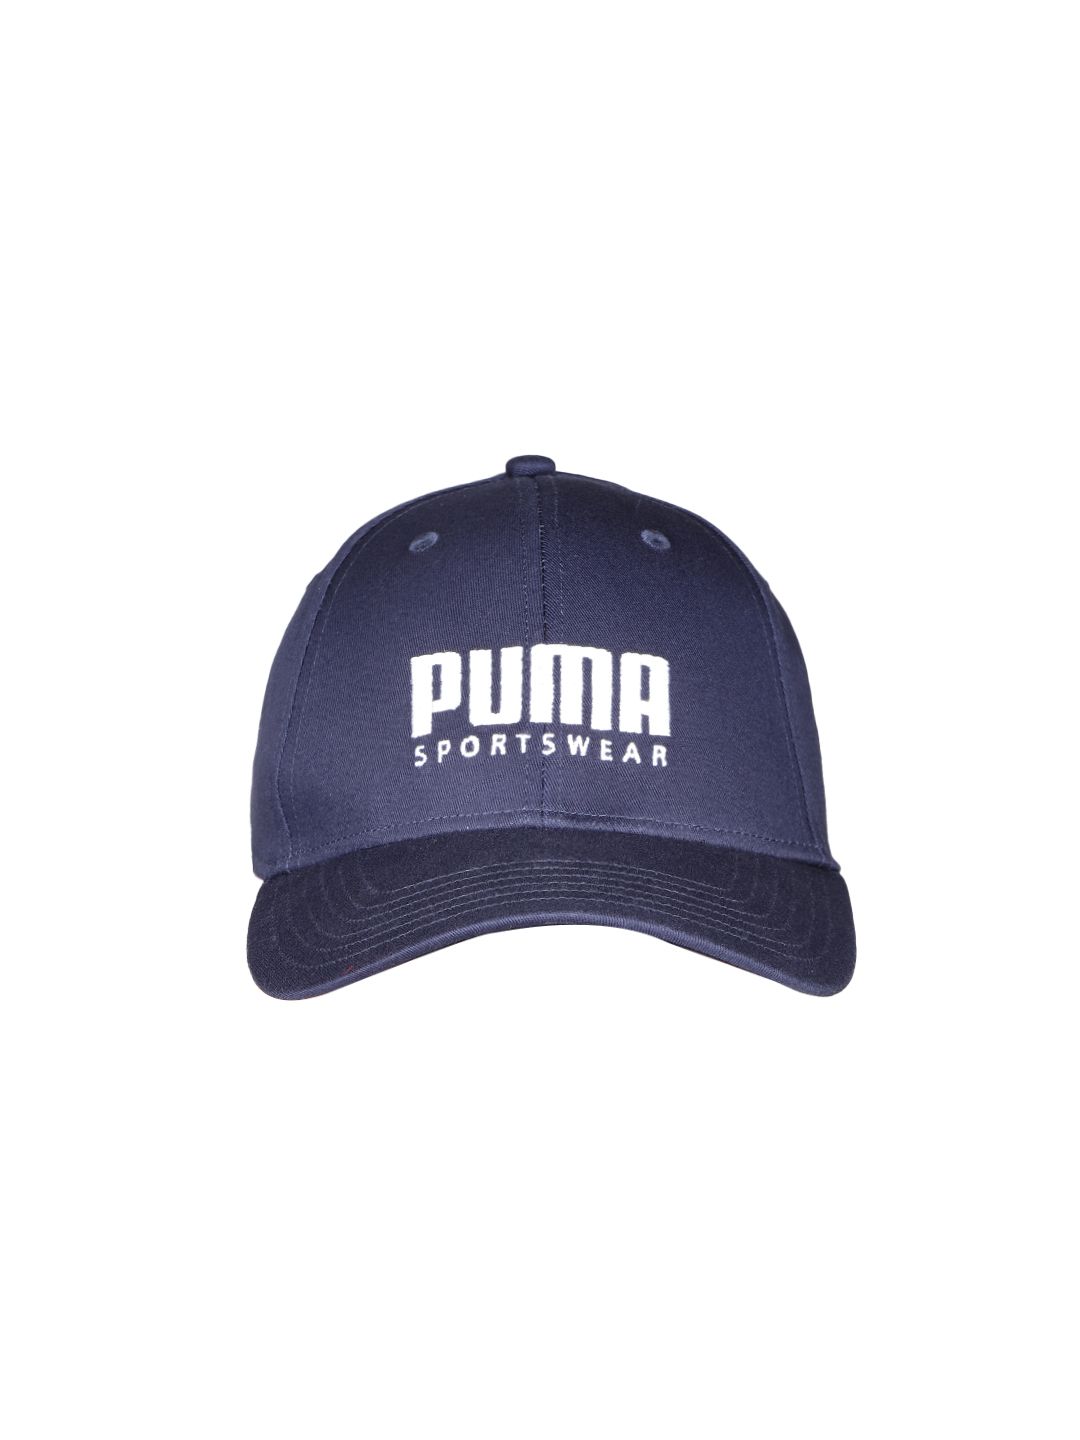 Puma Unisex Navy Blue Printed Baseball Cap Price in India